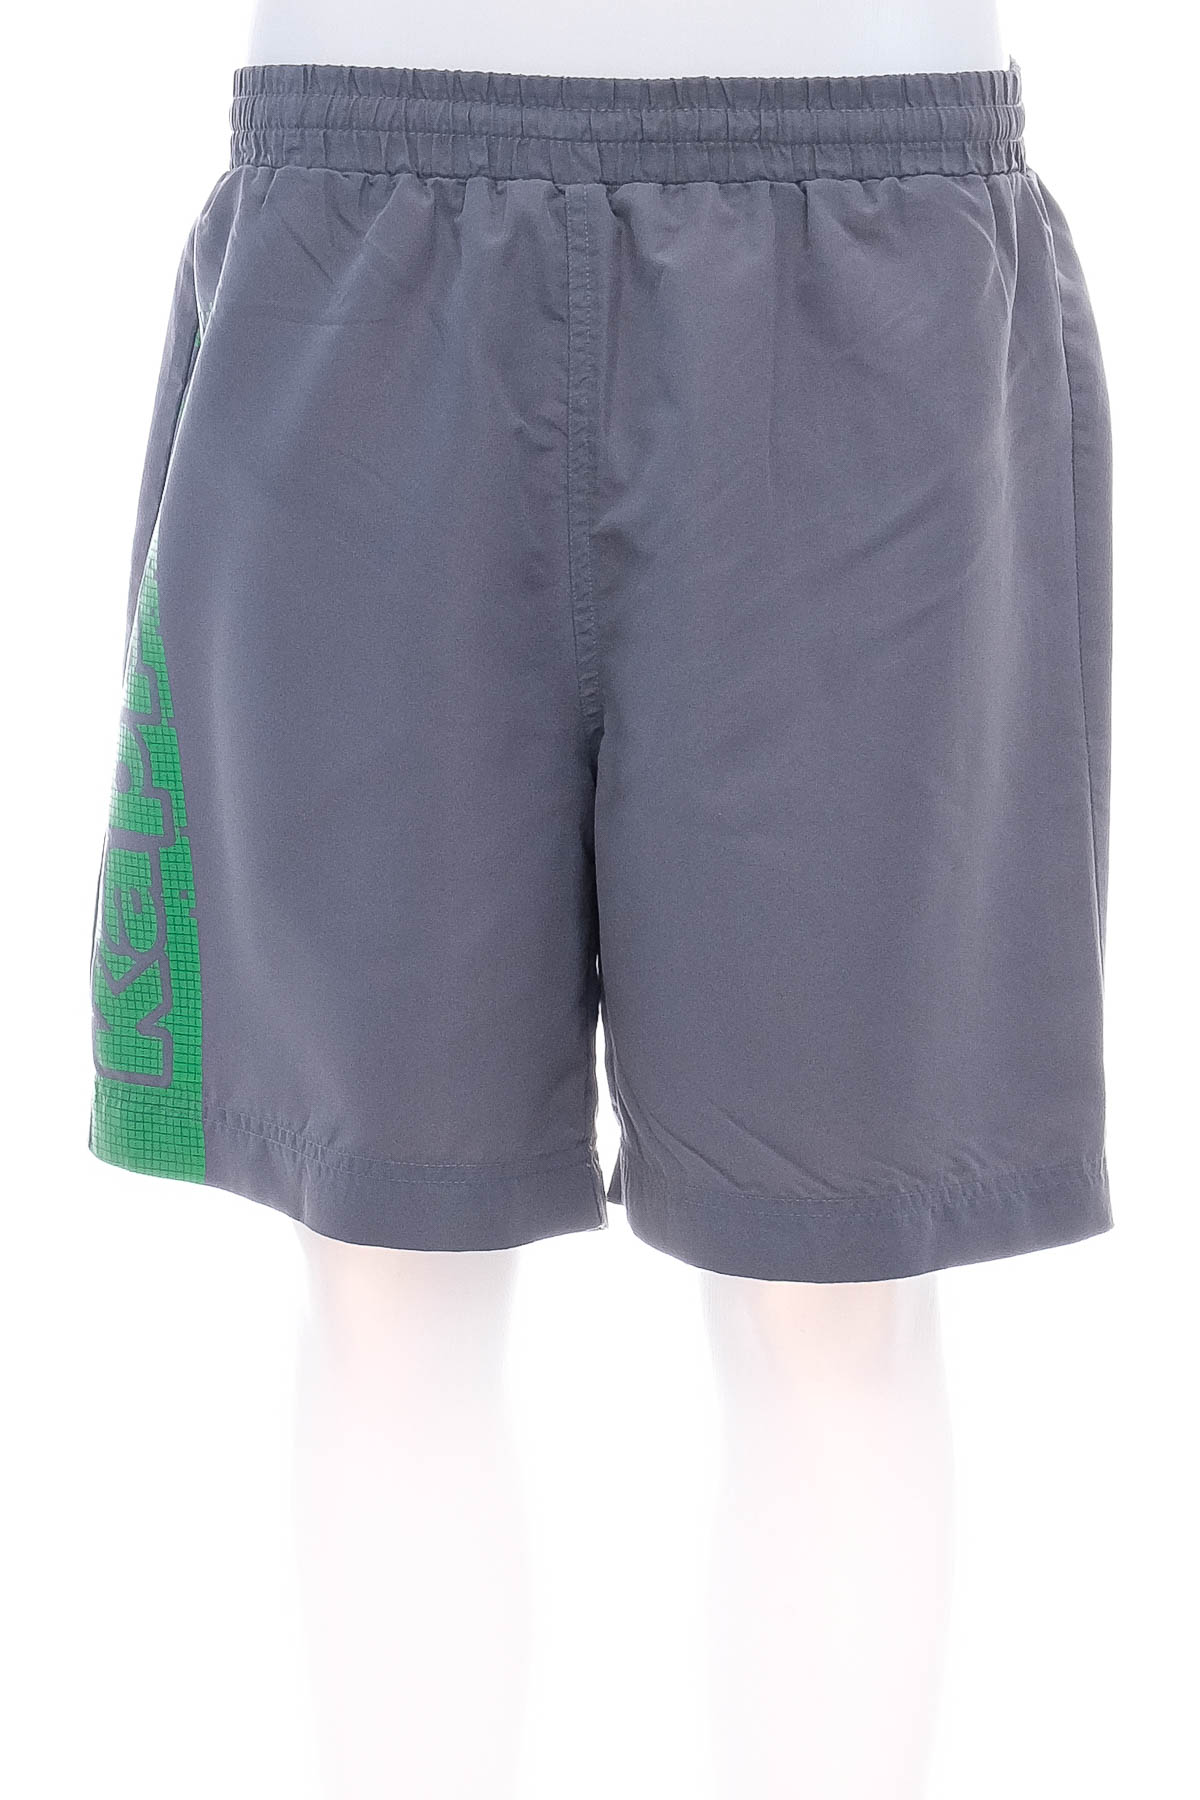 Men's shorts - Kappa - 0